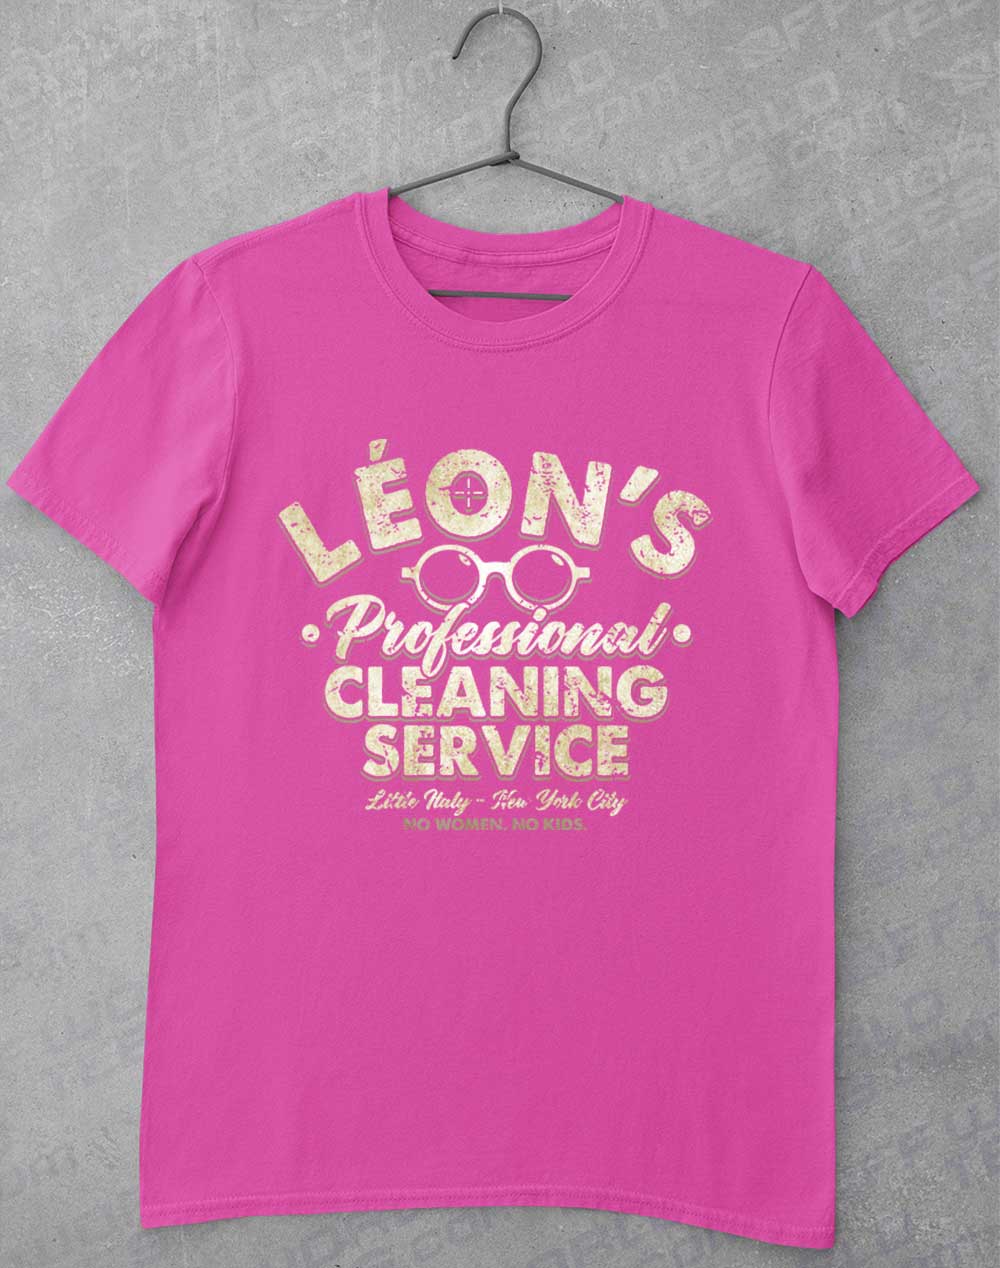 Azalea - Leon's Professional Cleaning T-Shirt